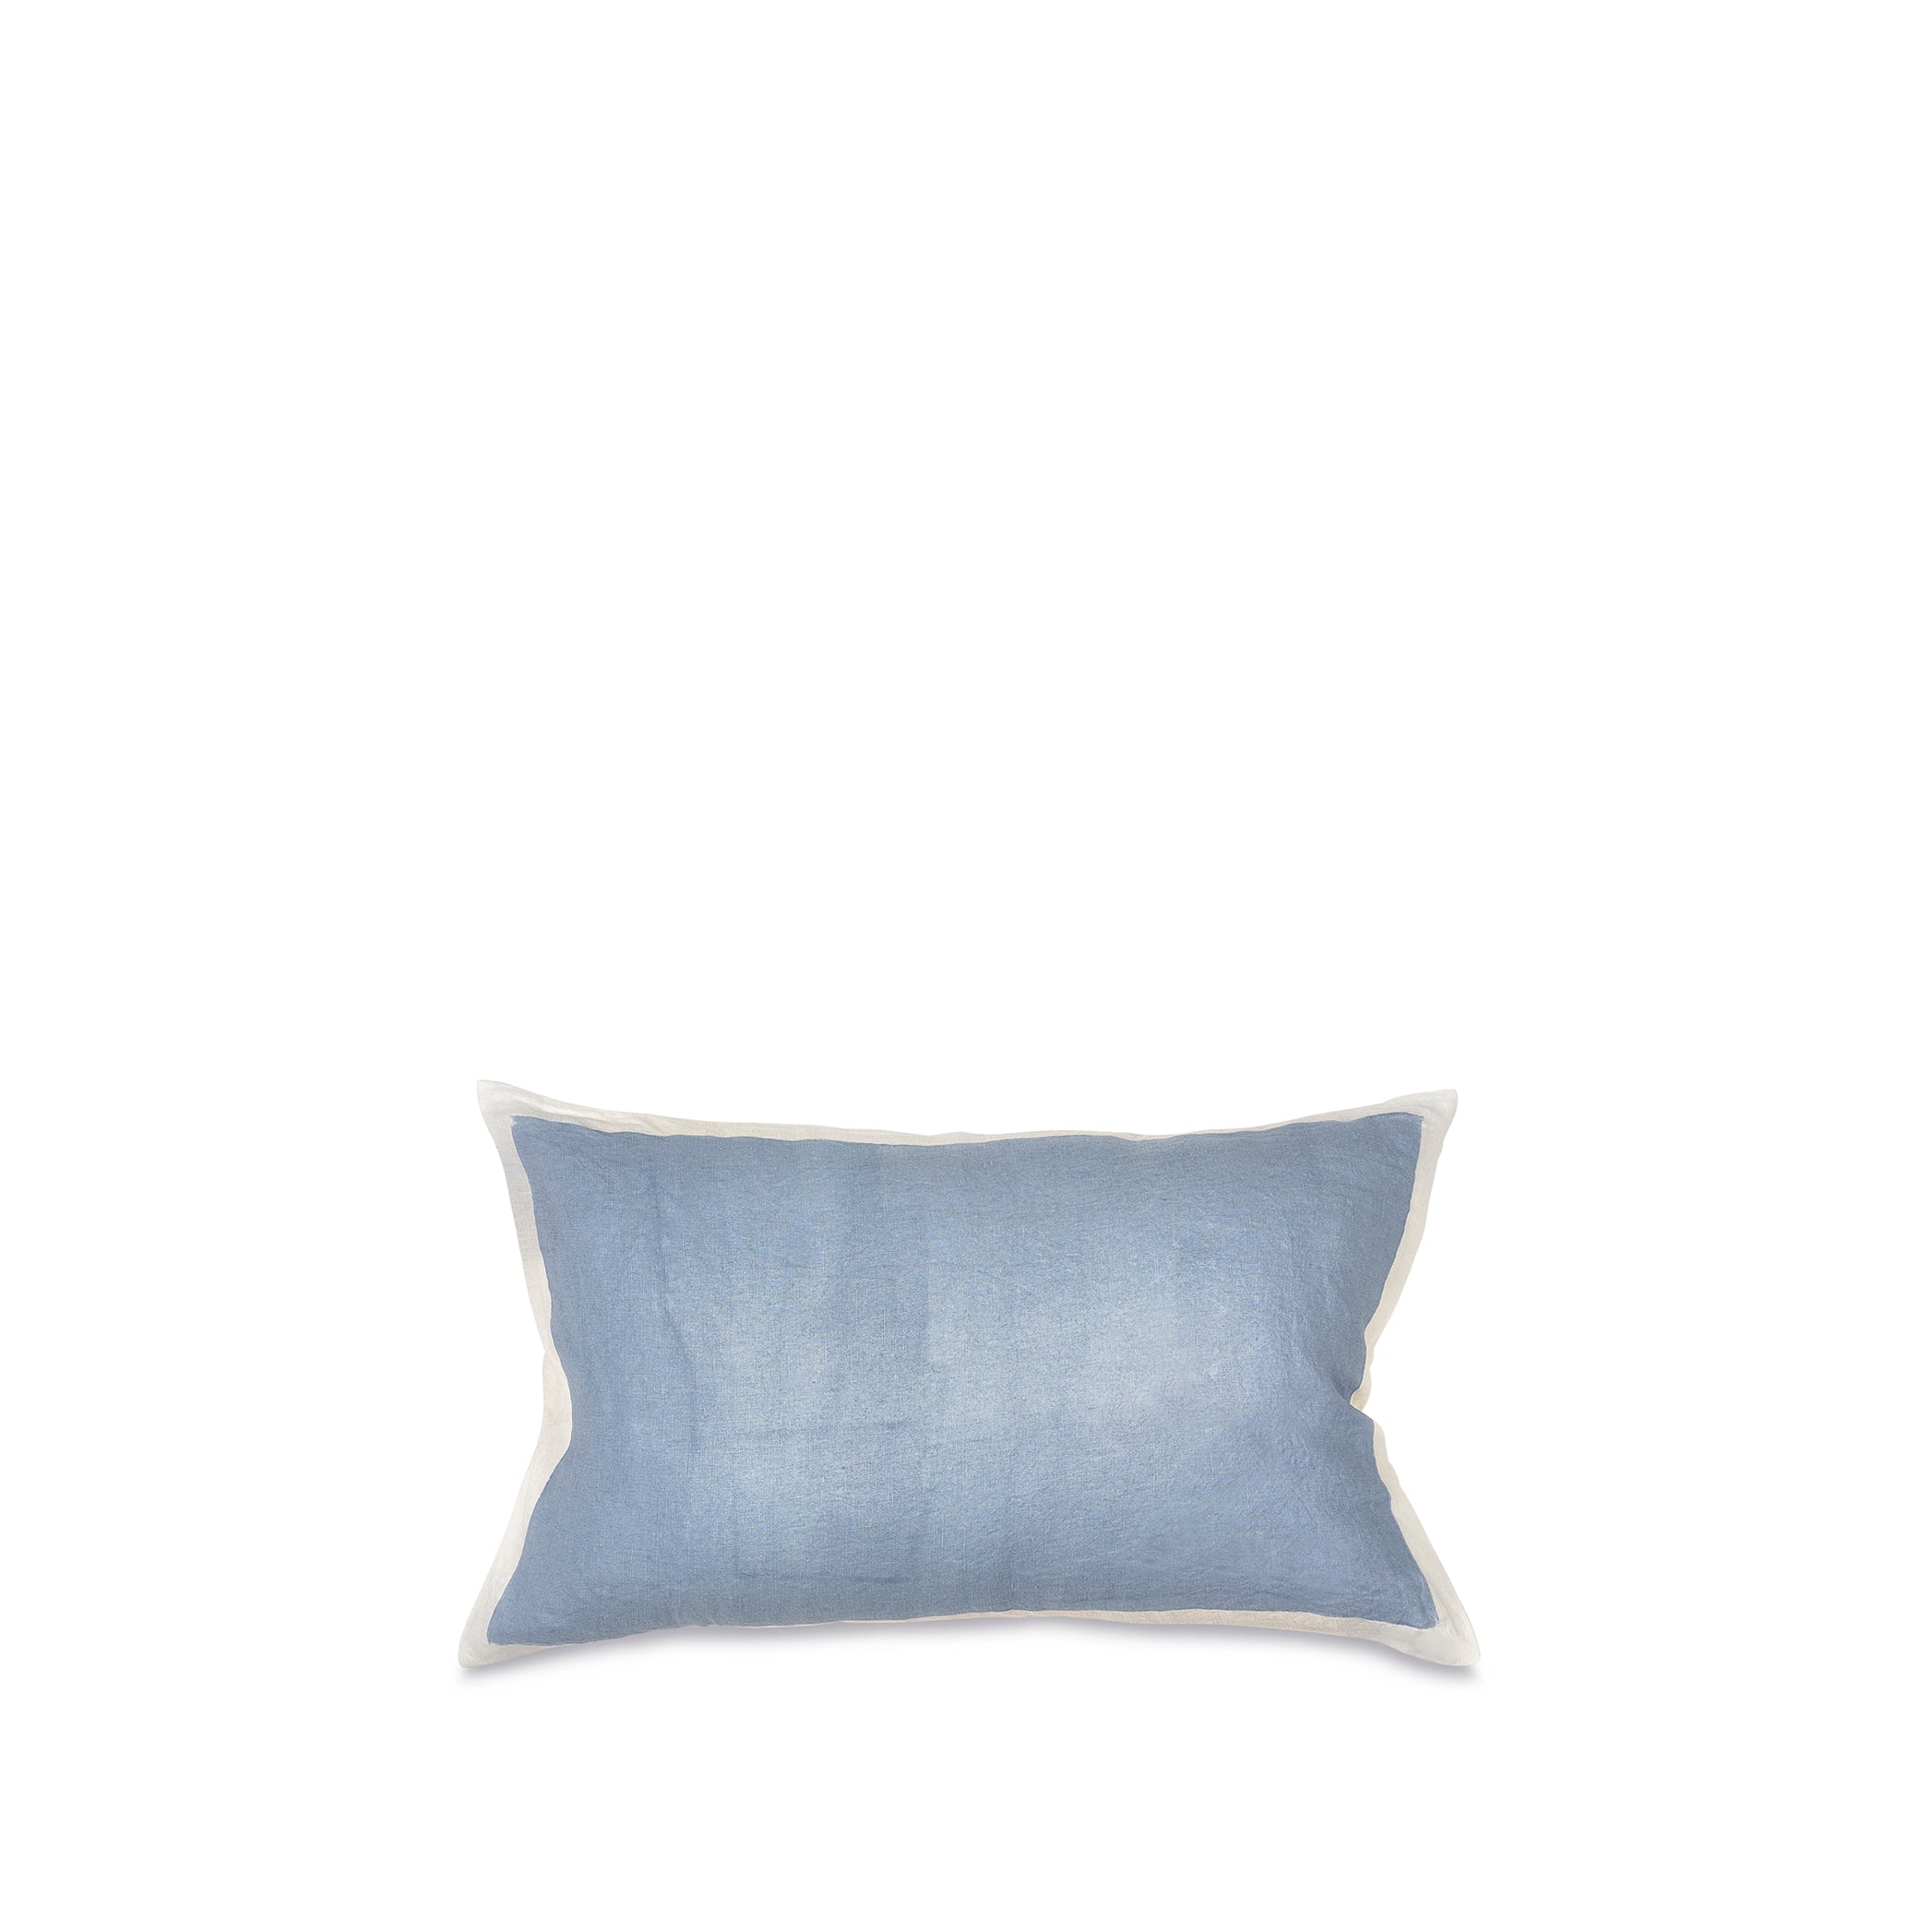 Hand Painted Linen Cushion in Pale Blue, 50cm x 30cm